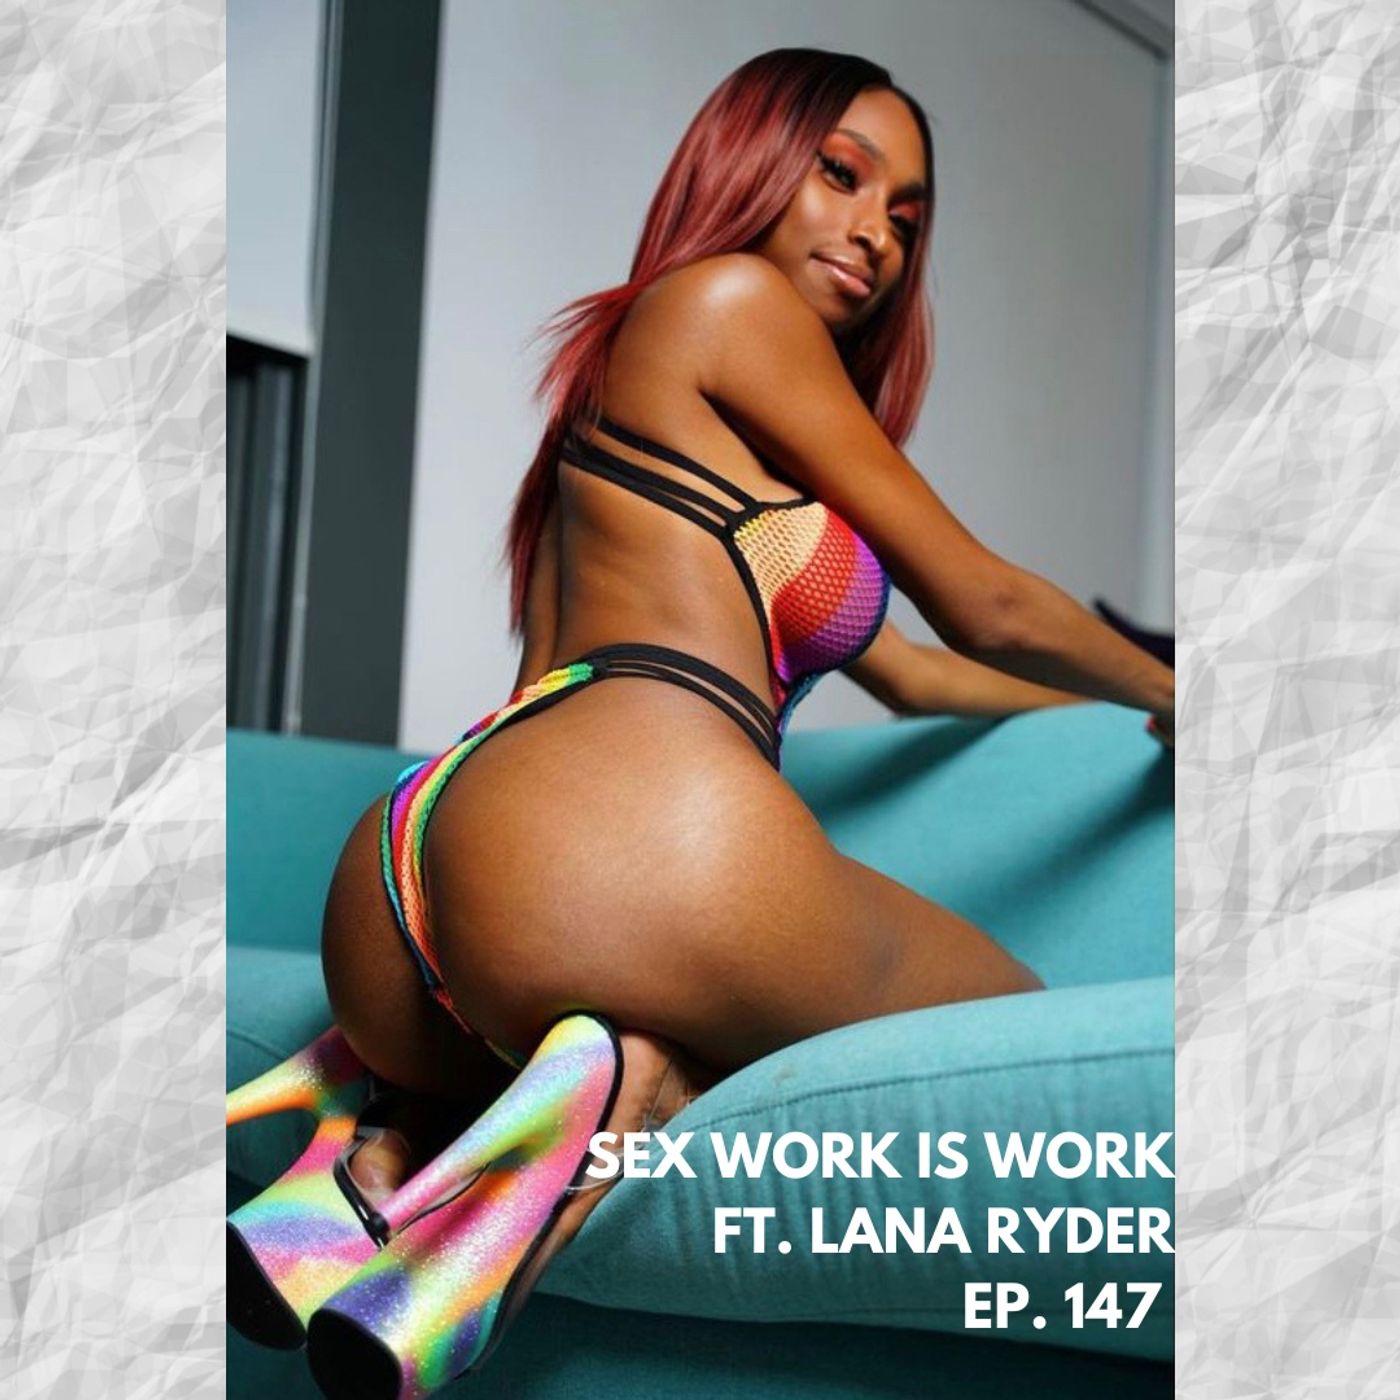 Ep. 147 Sex Work is Work ft. Lana Ryder